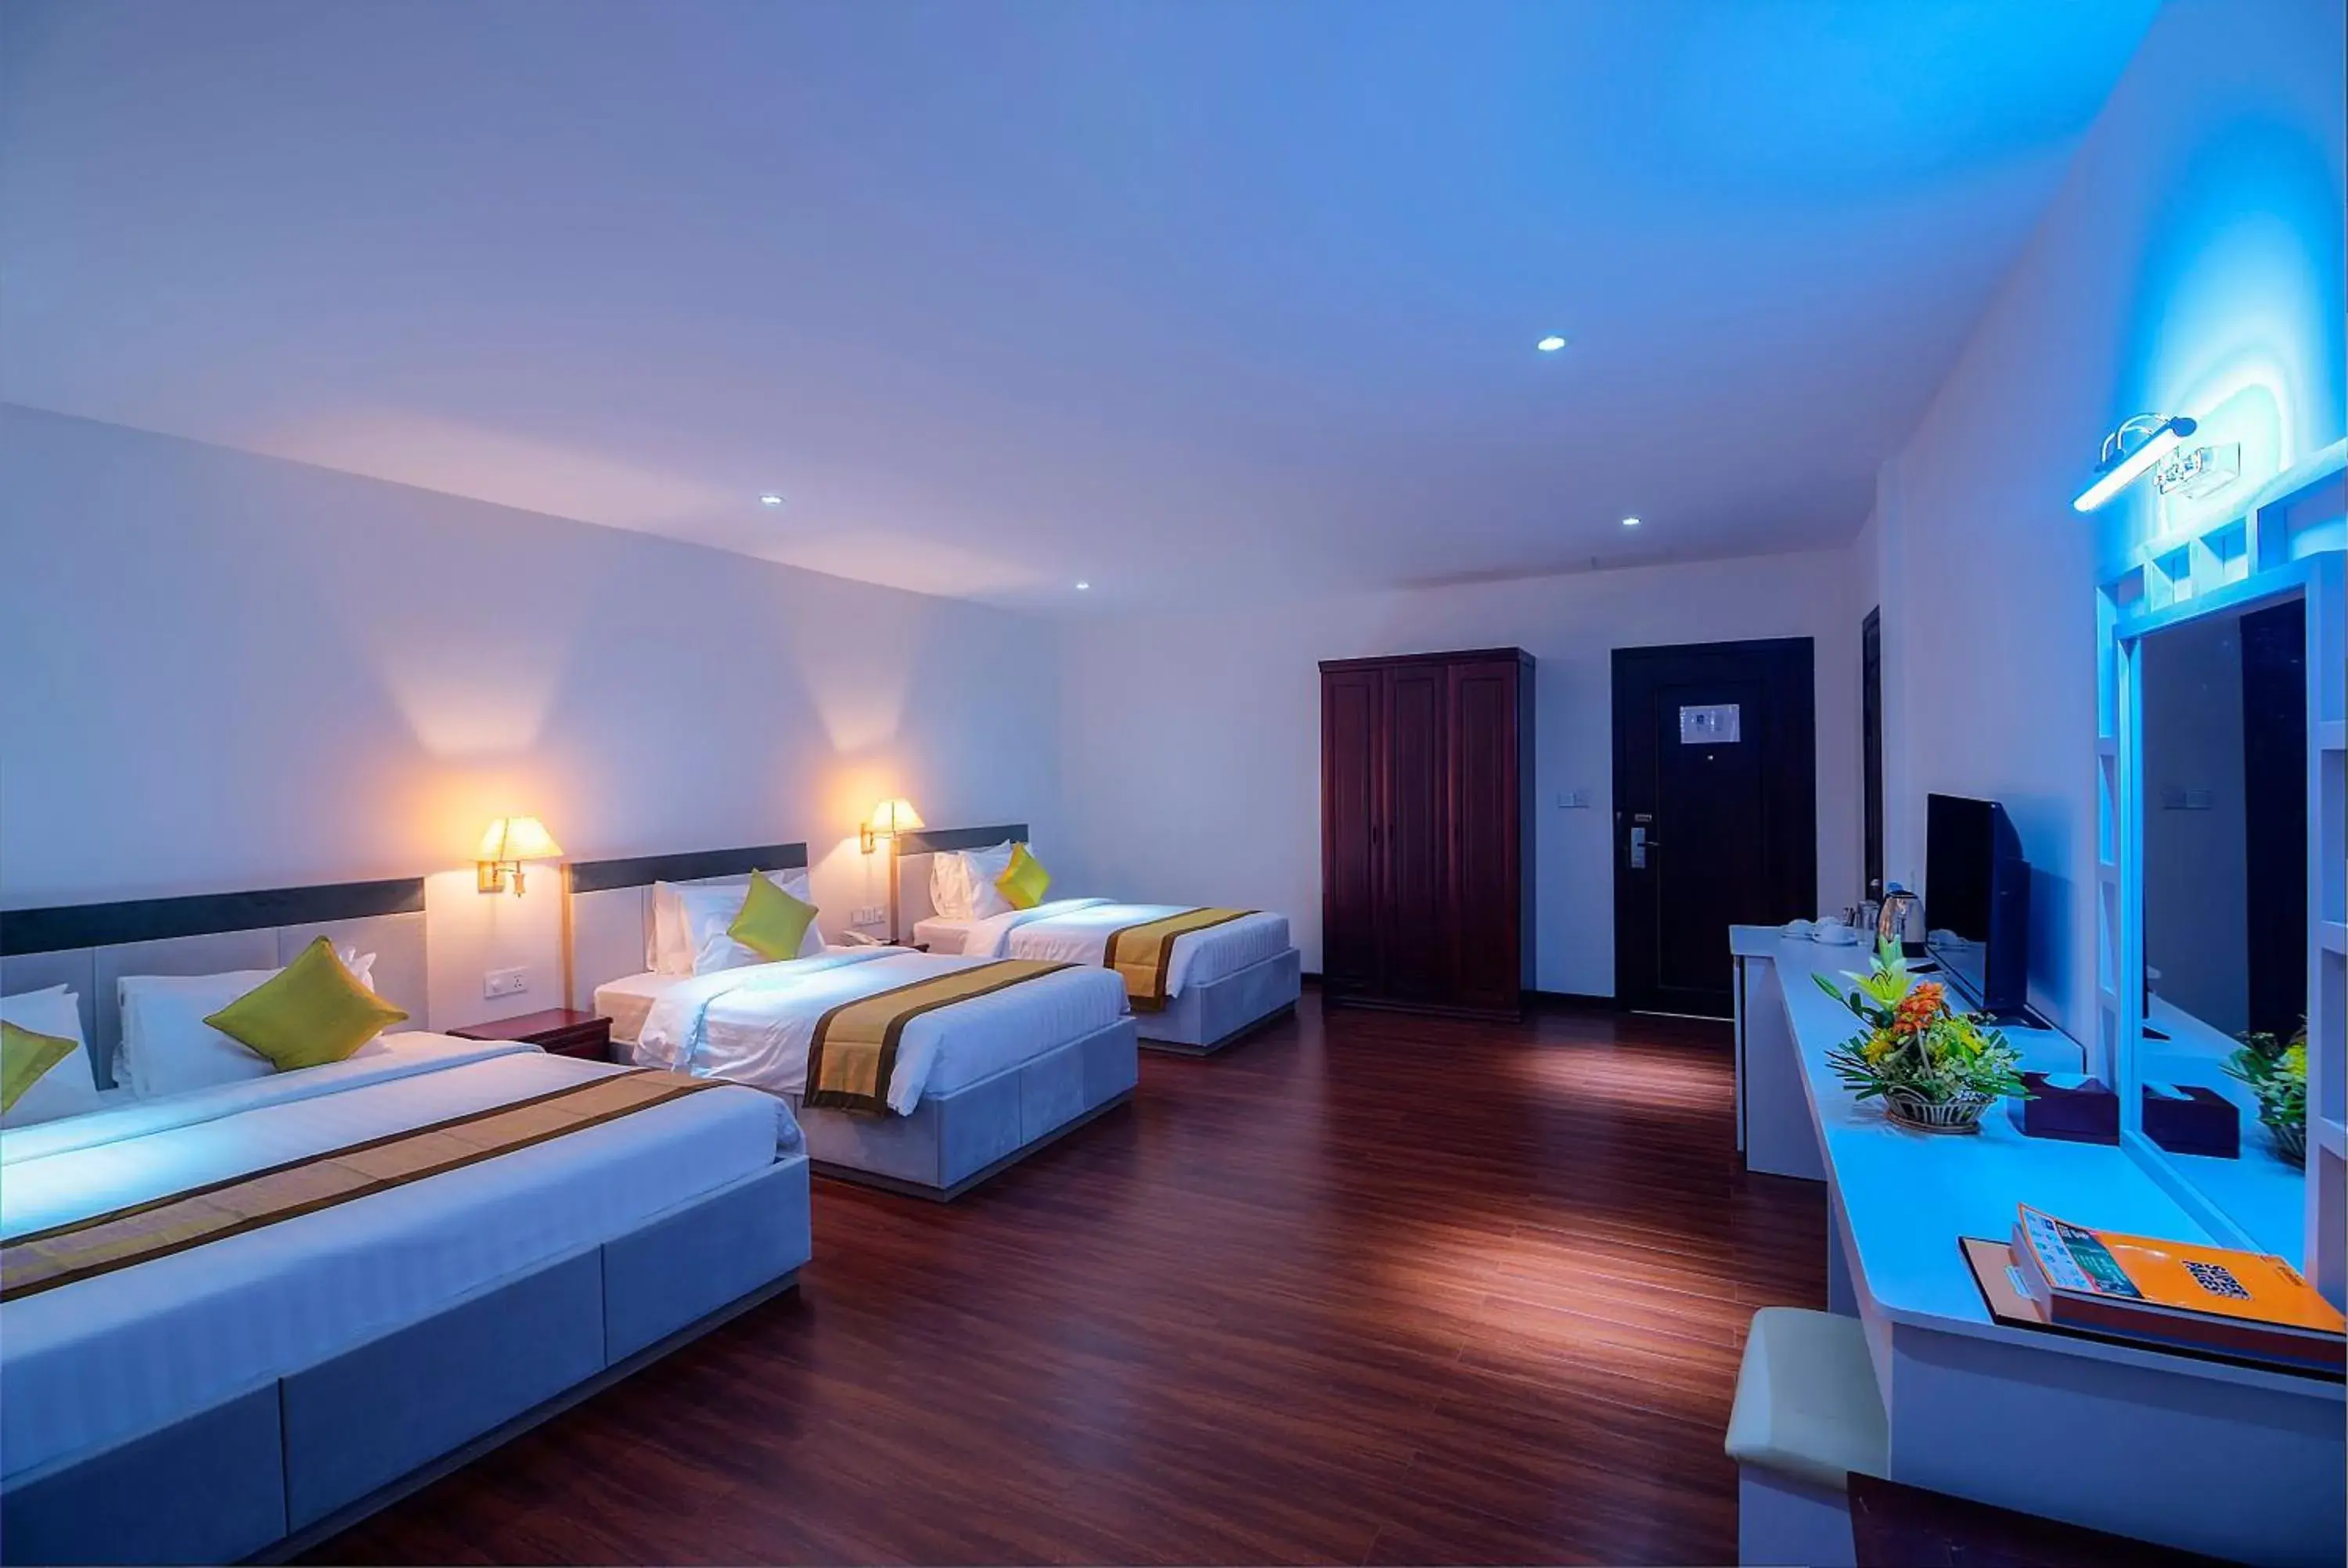 Bedroom, Room Photo in Starry Angkor Hotel